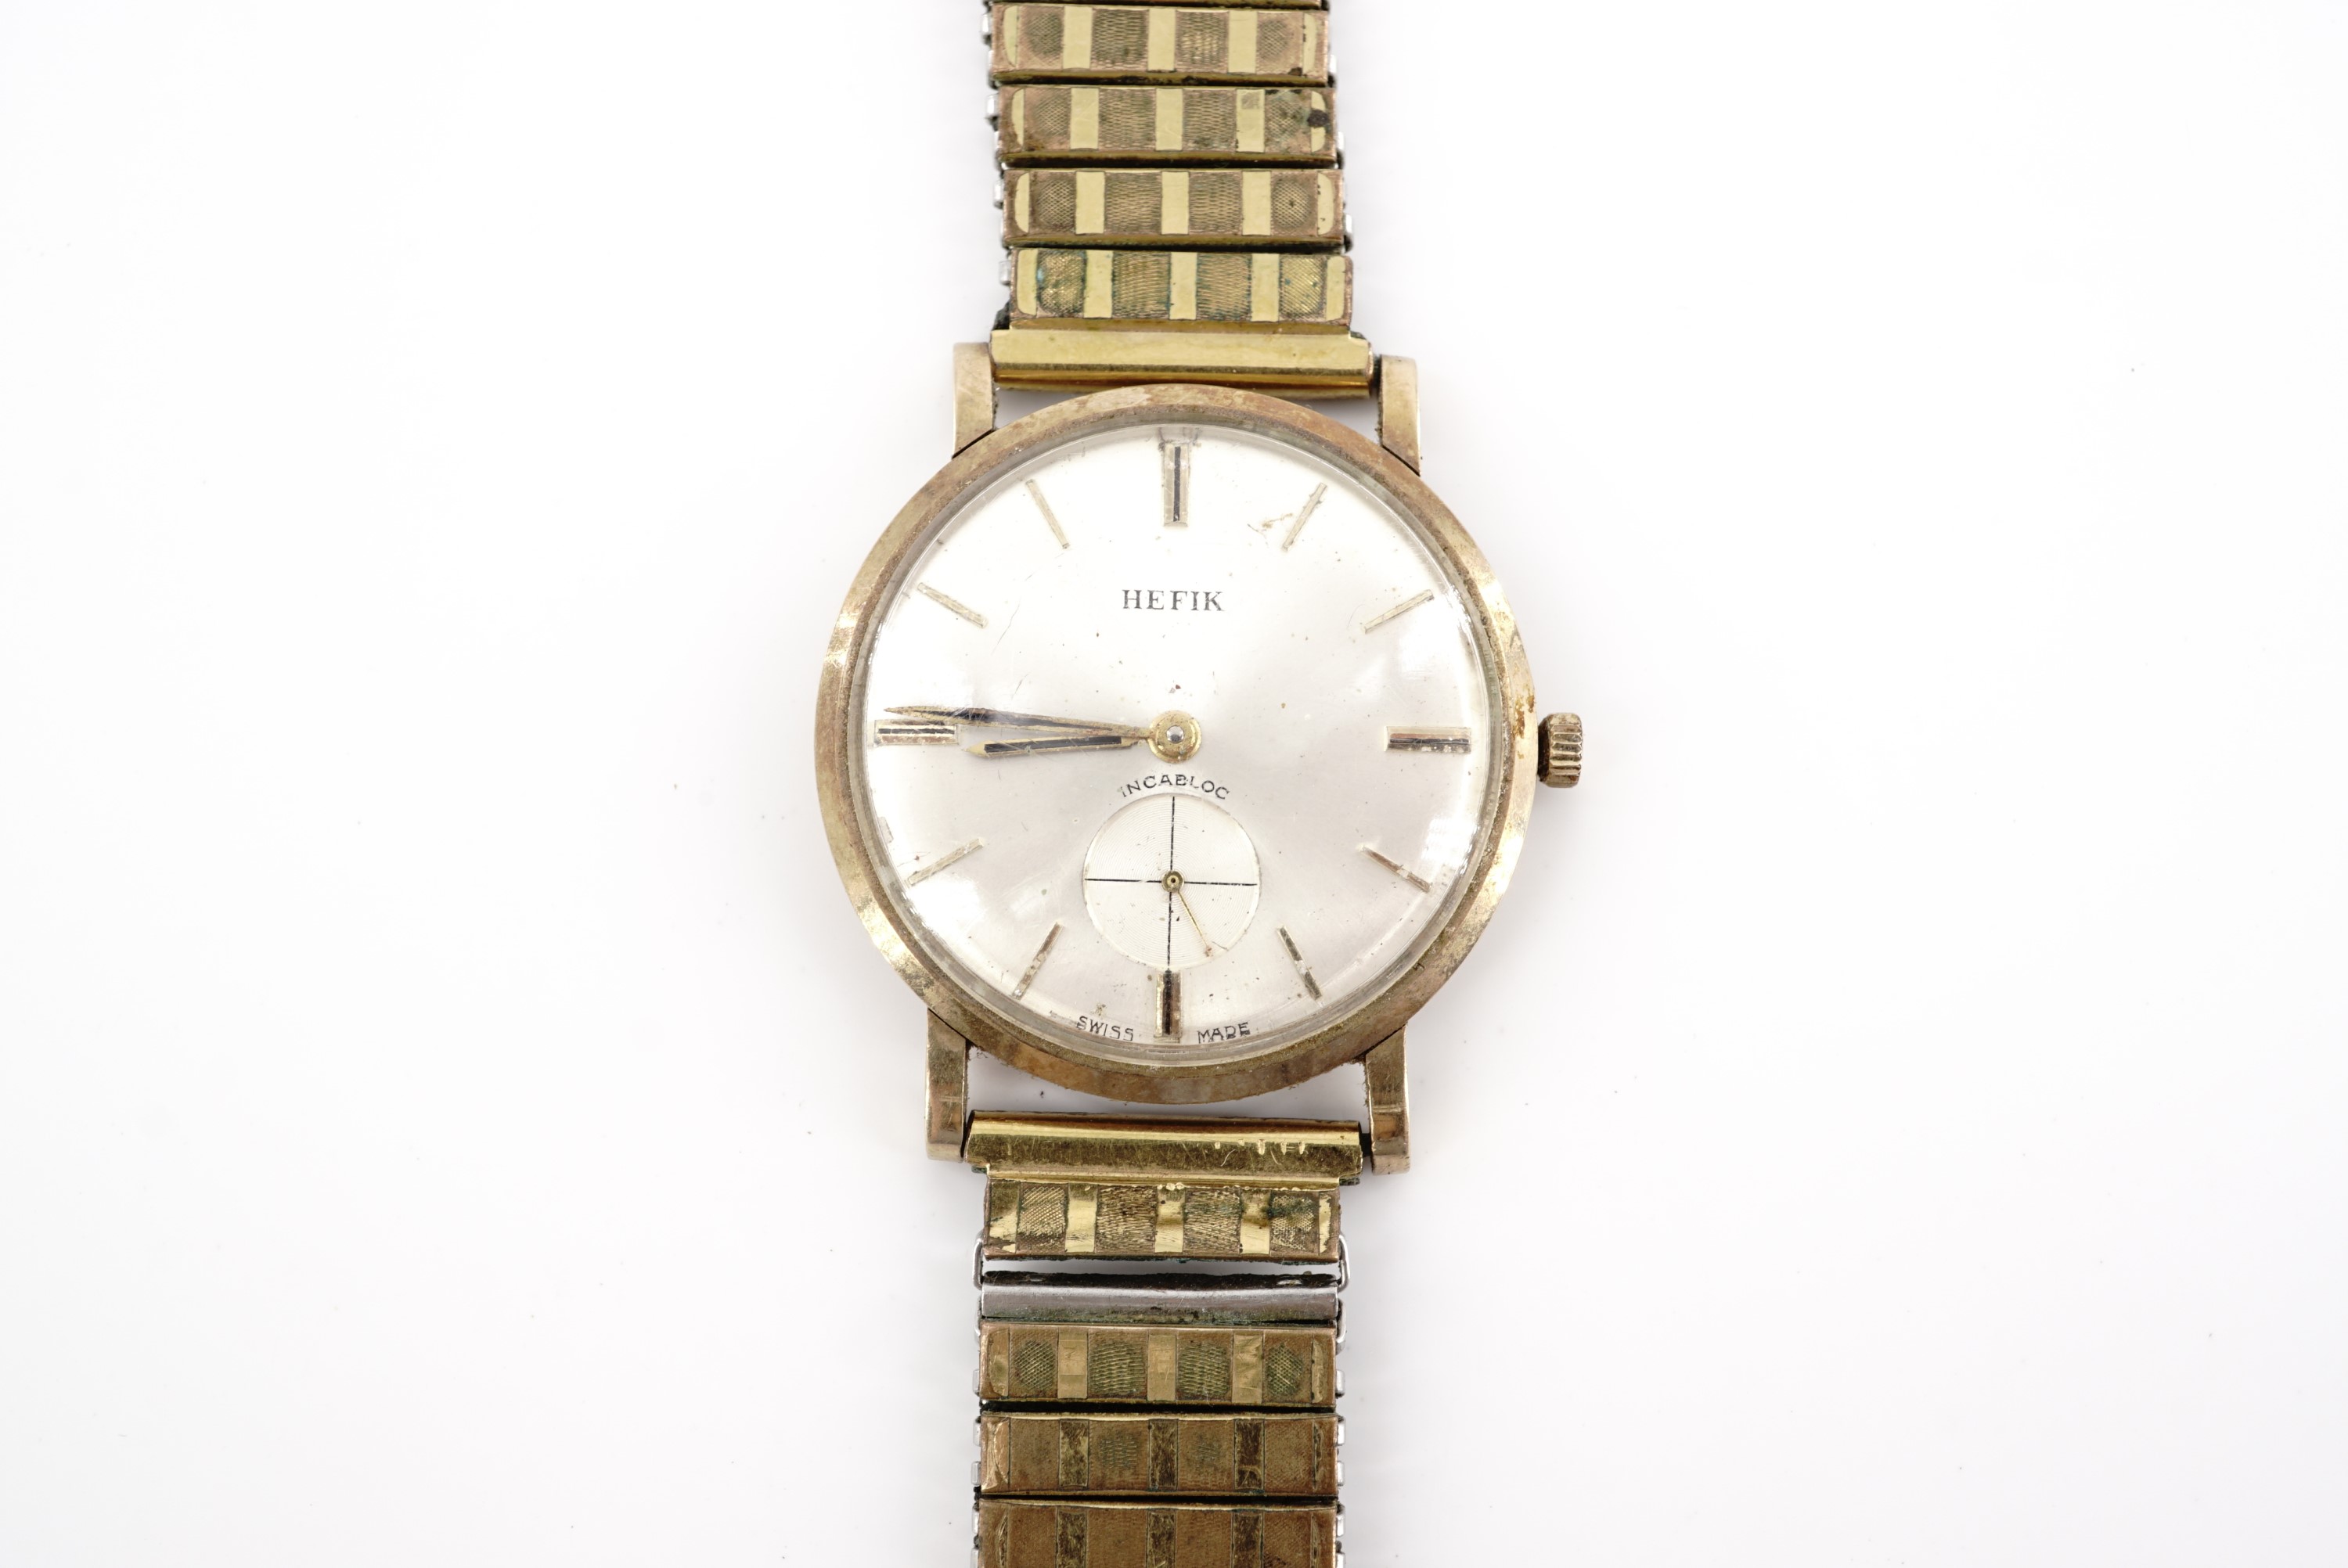 A 1960s Hefik 9 ct gold wristwatch, having a Swiss 17 jewel manual wing movement and radially